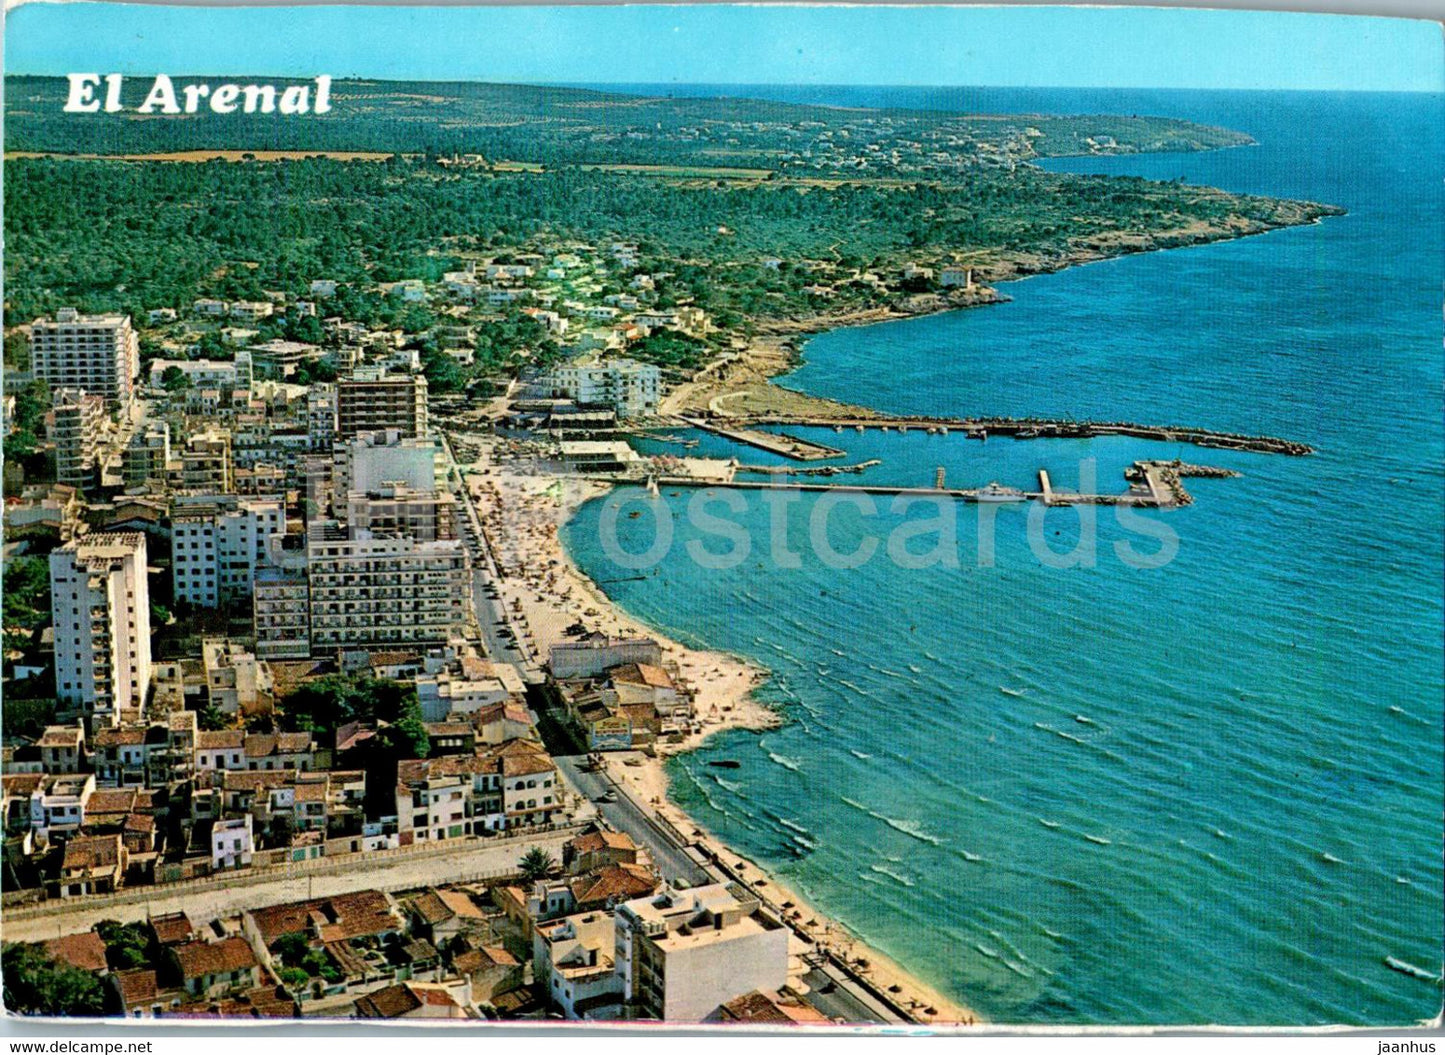 El Arenal - Vista aerea - aerial view - Mallorca - 764 - Spain - unused - JH Postcards